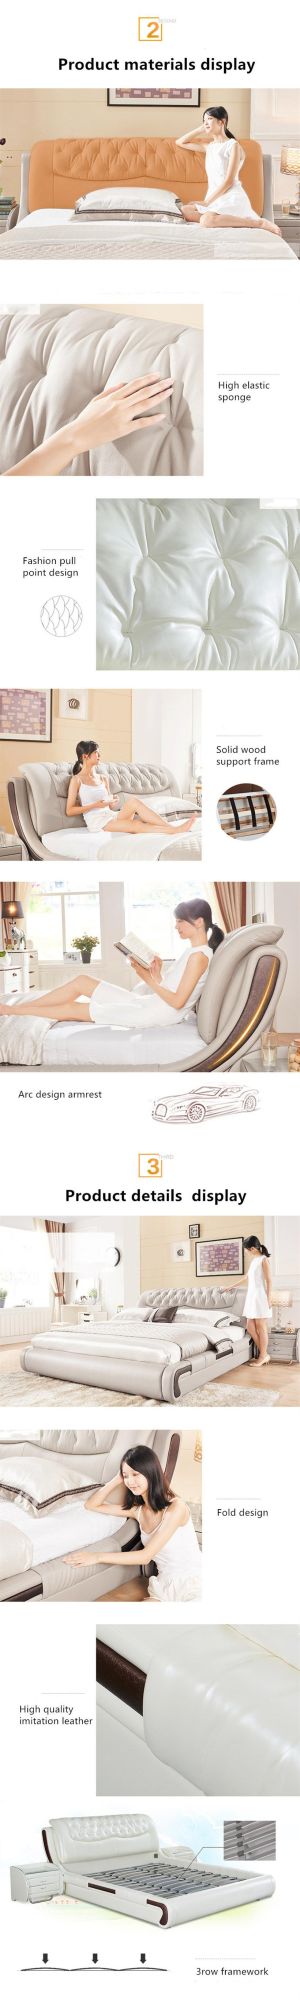 Light Luxury European 1.8m Soft Bed Modern Simple Furniture 0177-4